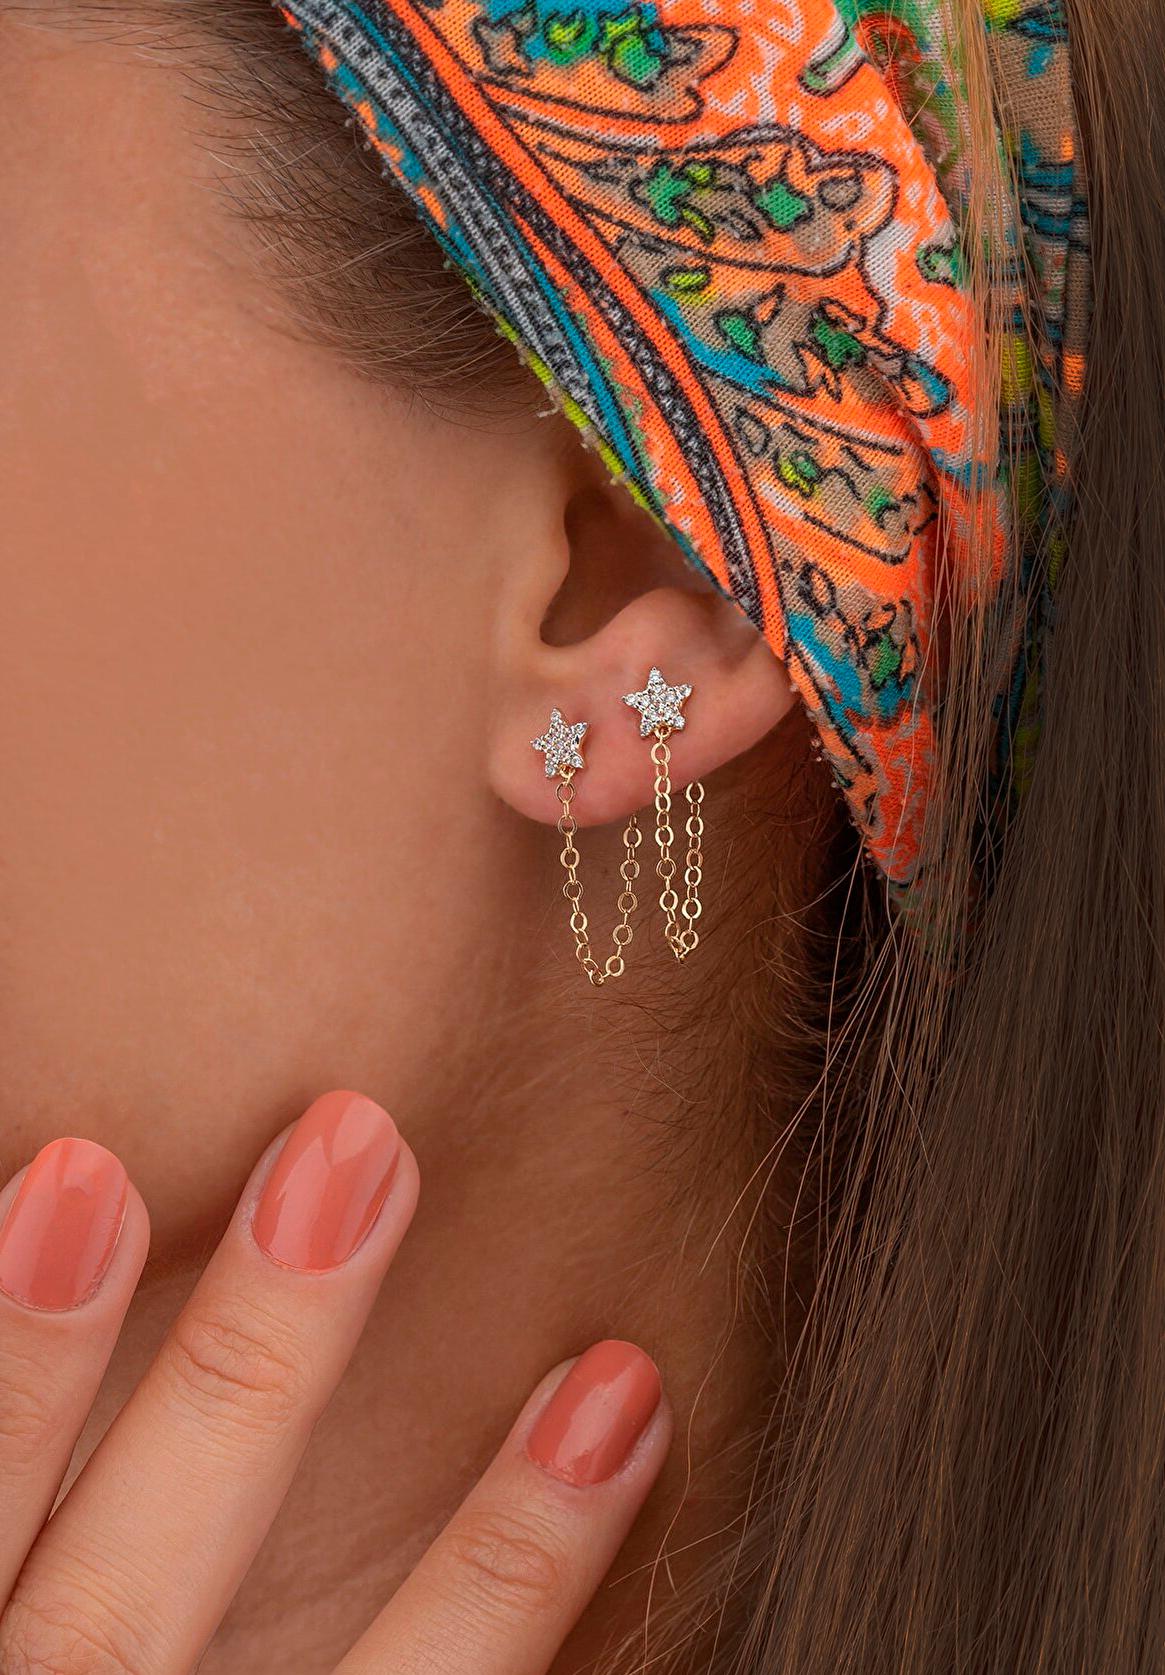 Modern Star Shaped Earrings Studs with 14k Gold Chain, Dainty Star Chain Earrings